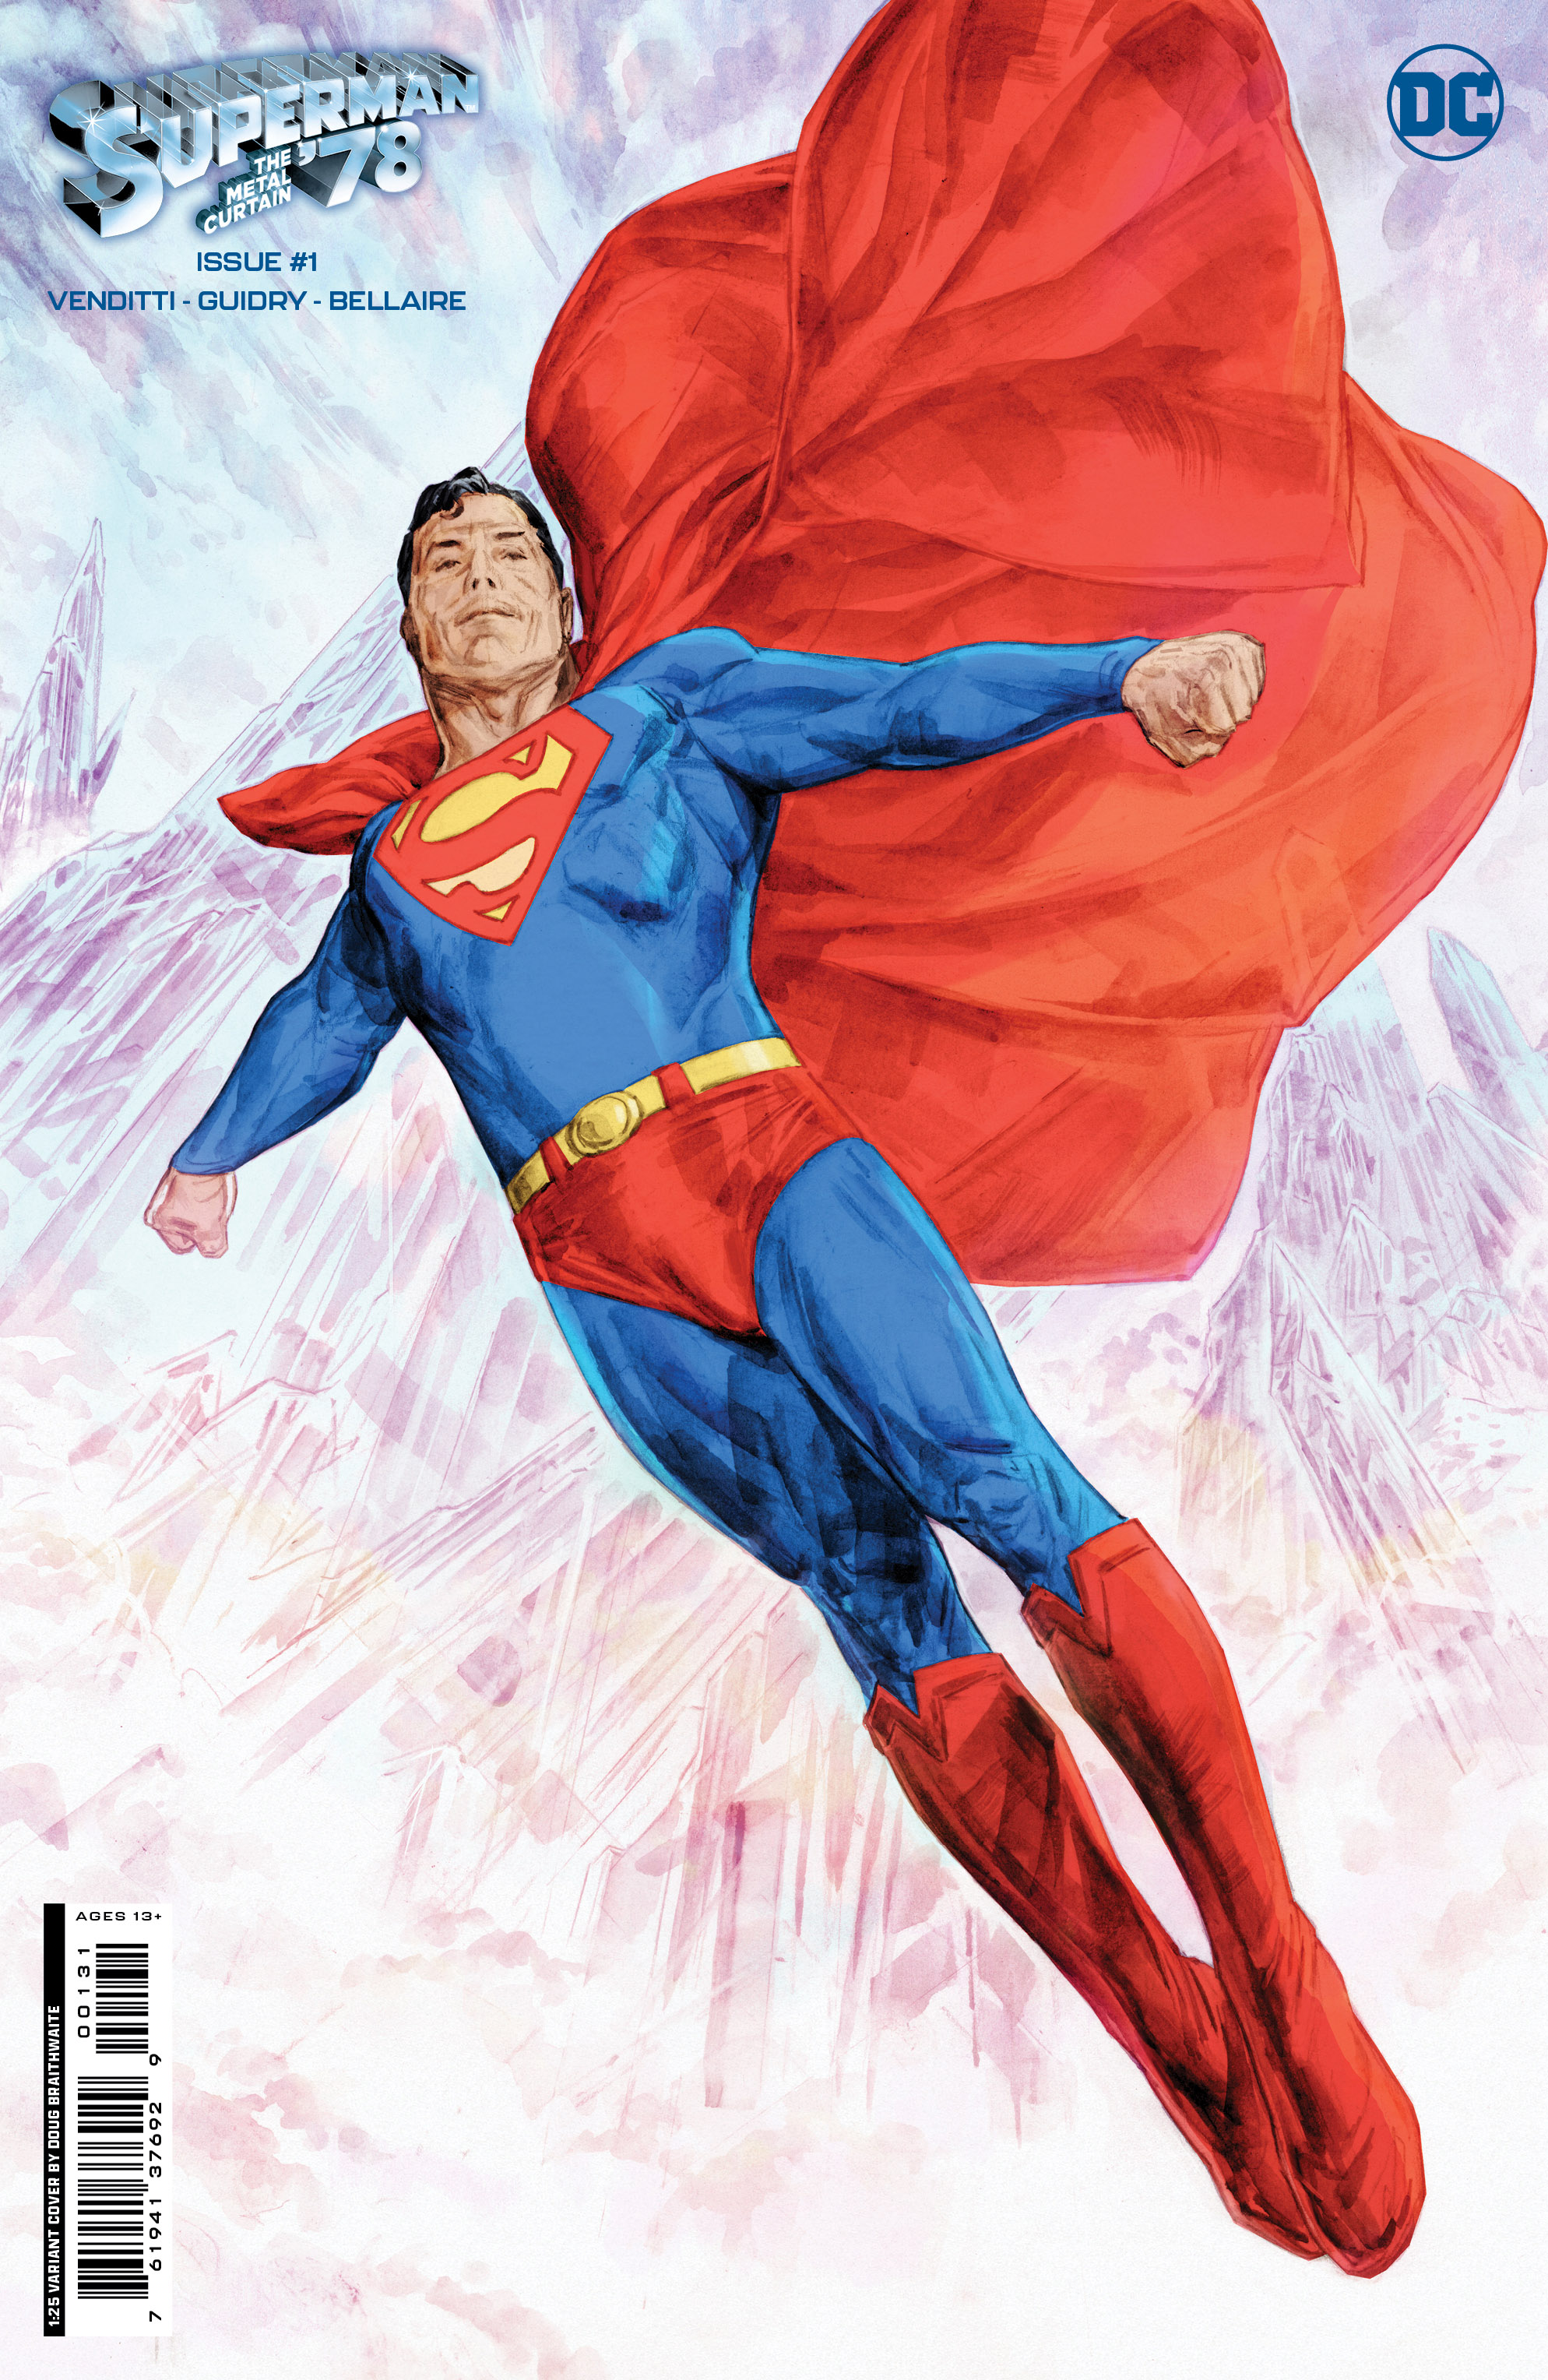 Superman '78 The Metal Curtain #1 Cover E 1 for 25 Incentive Doug Braithwaite Card Stock Variant (Of 6)